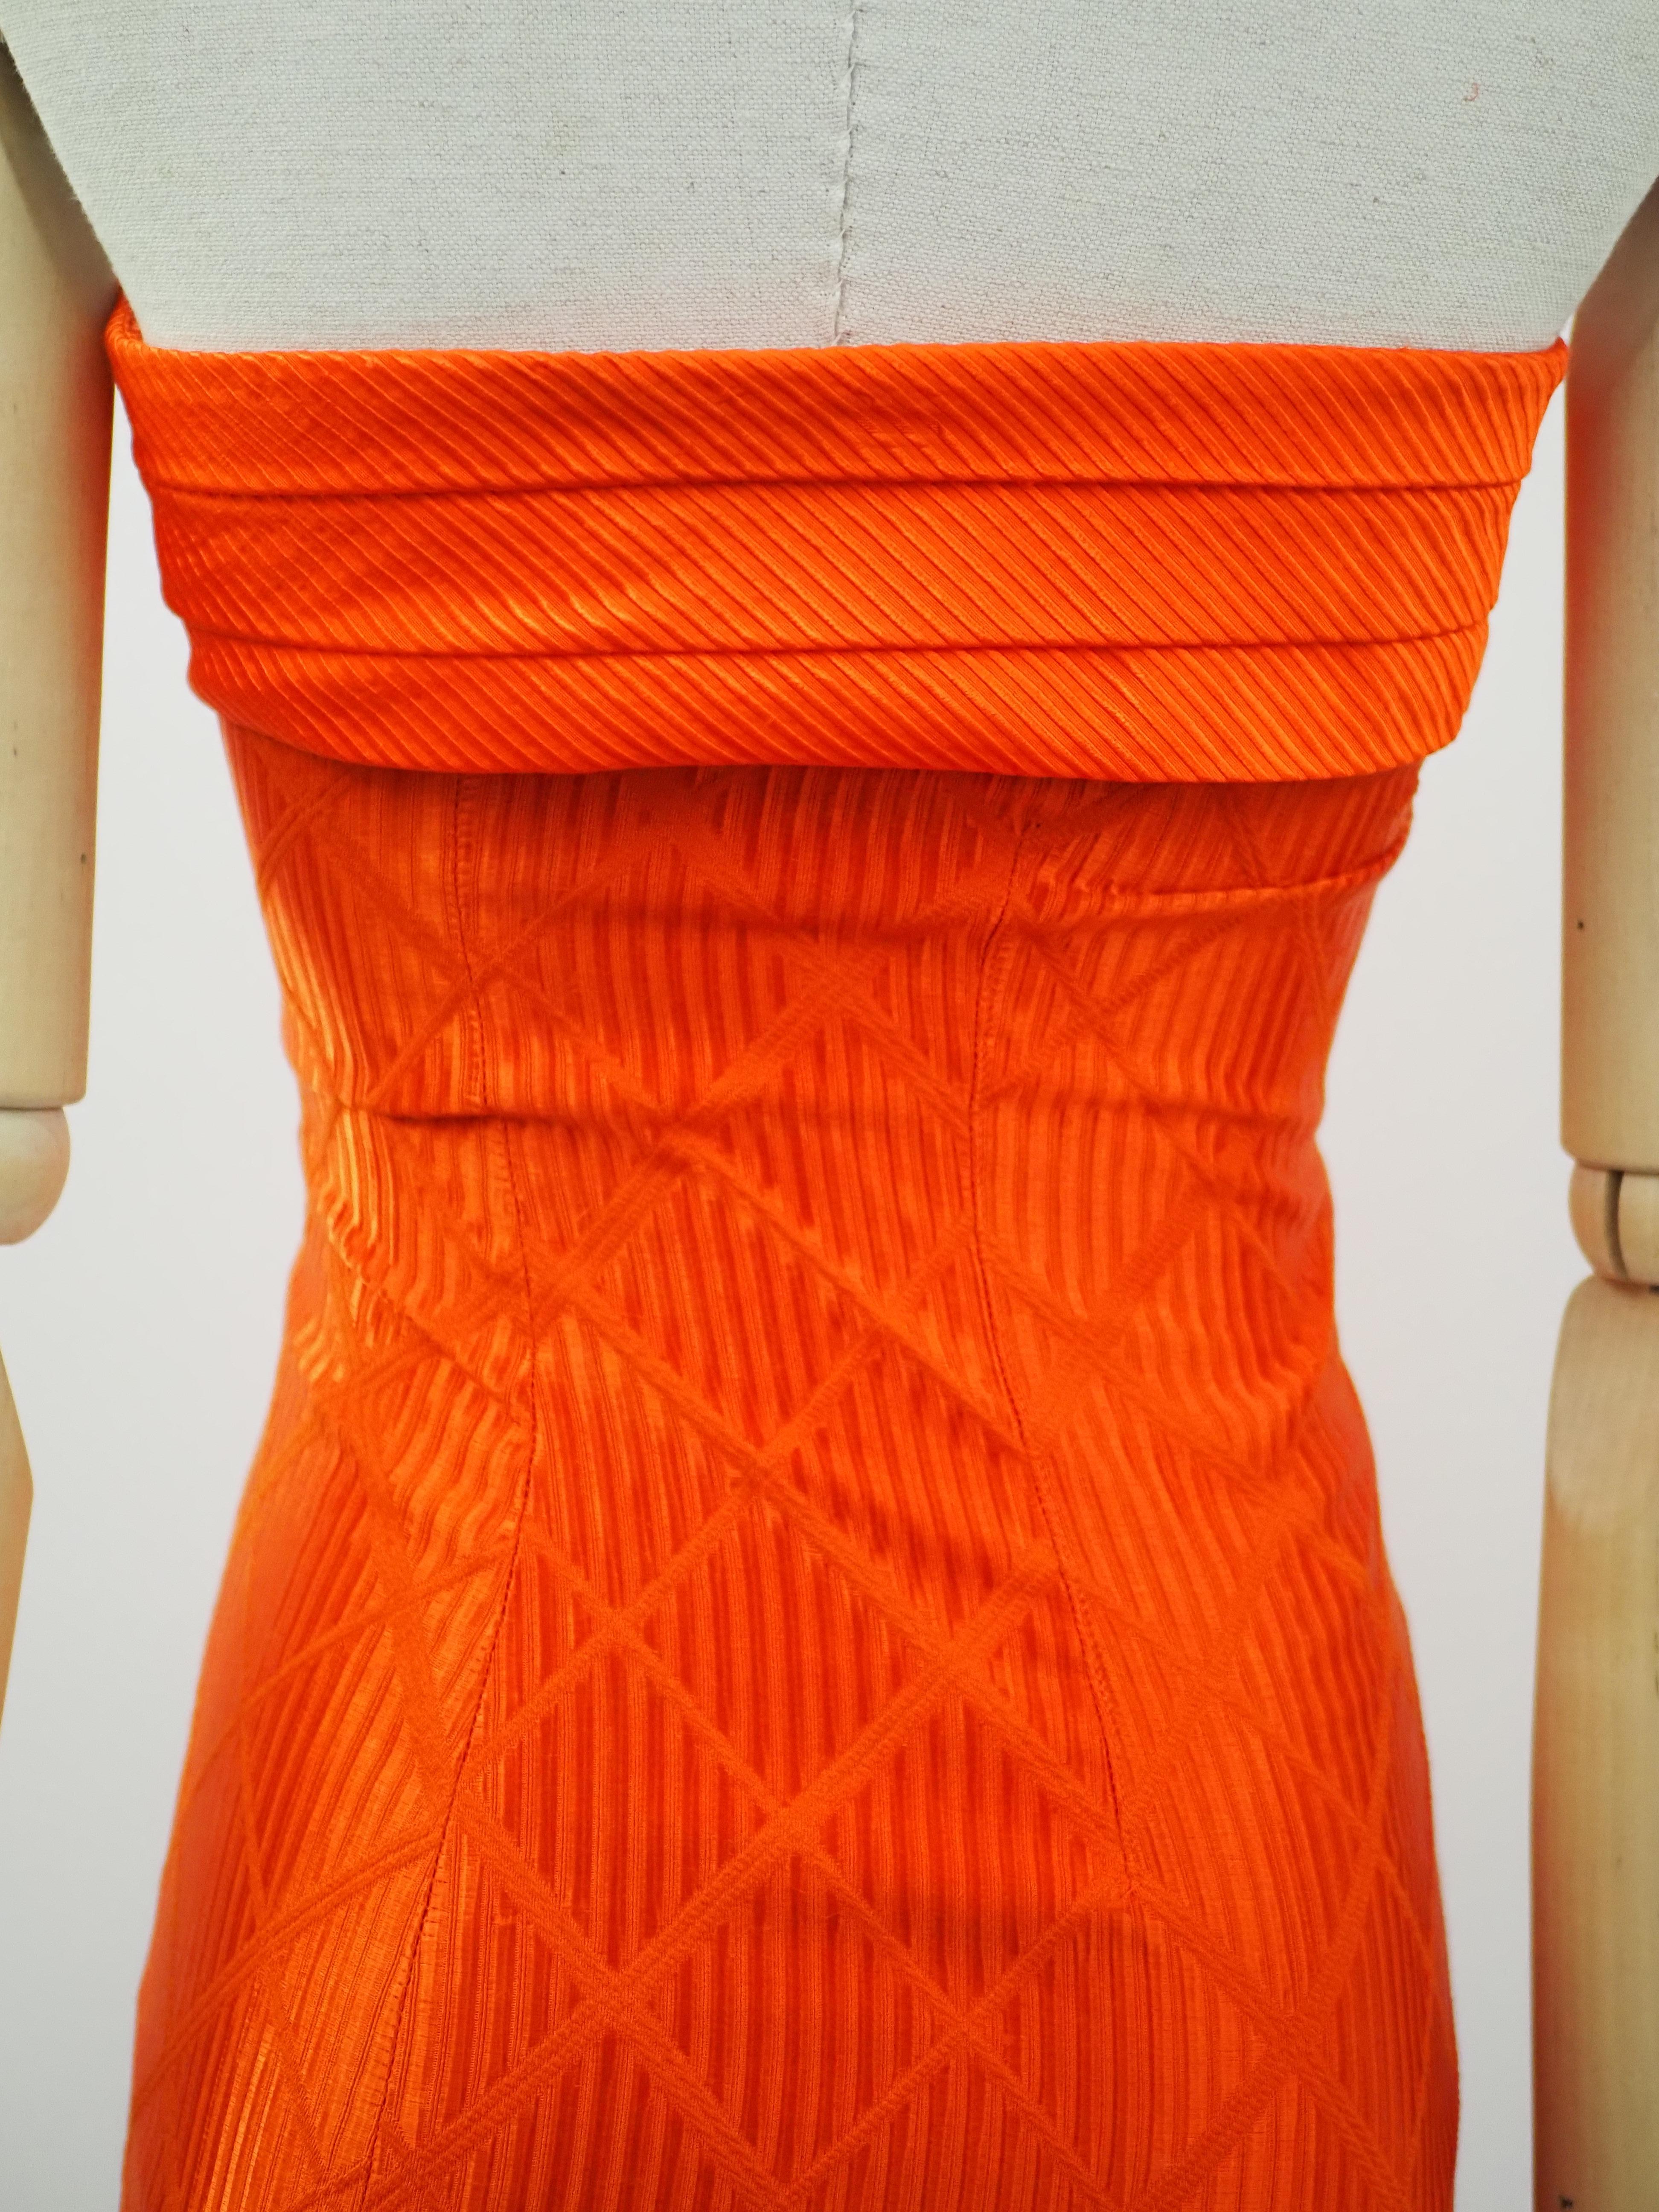 Versus by Gianni Versace orange dress 5